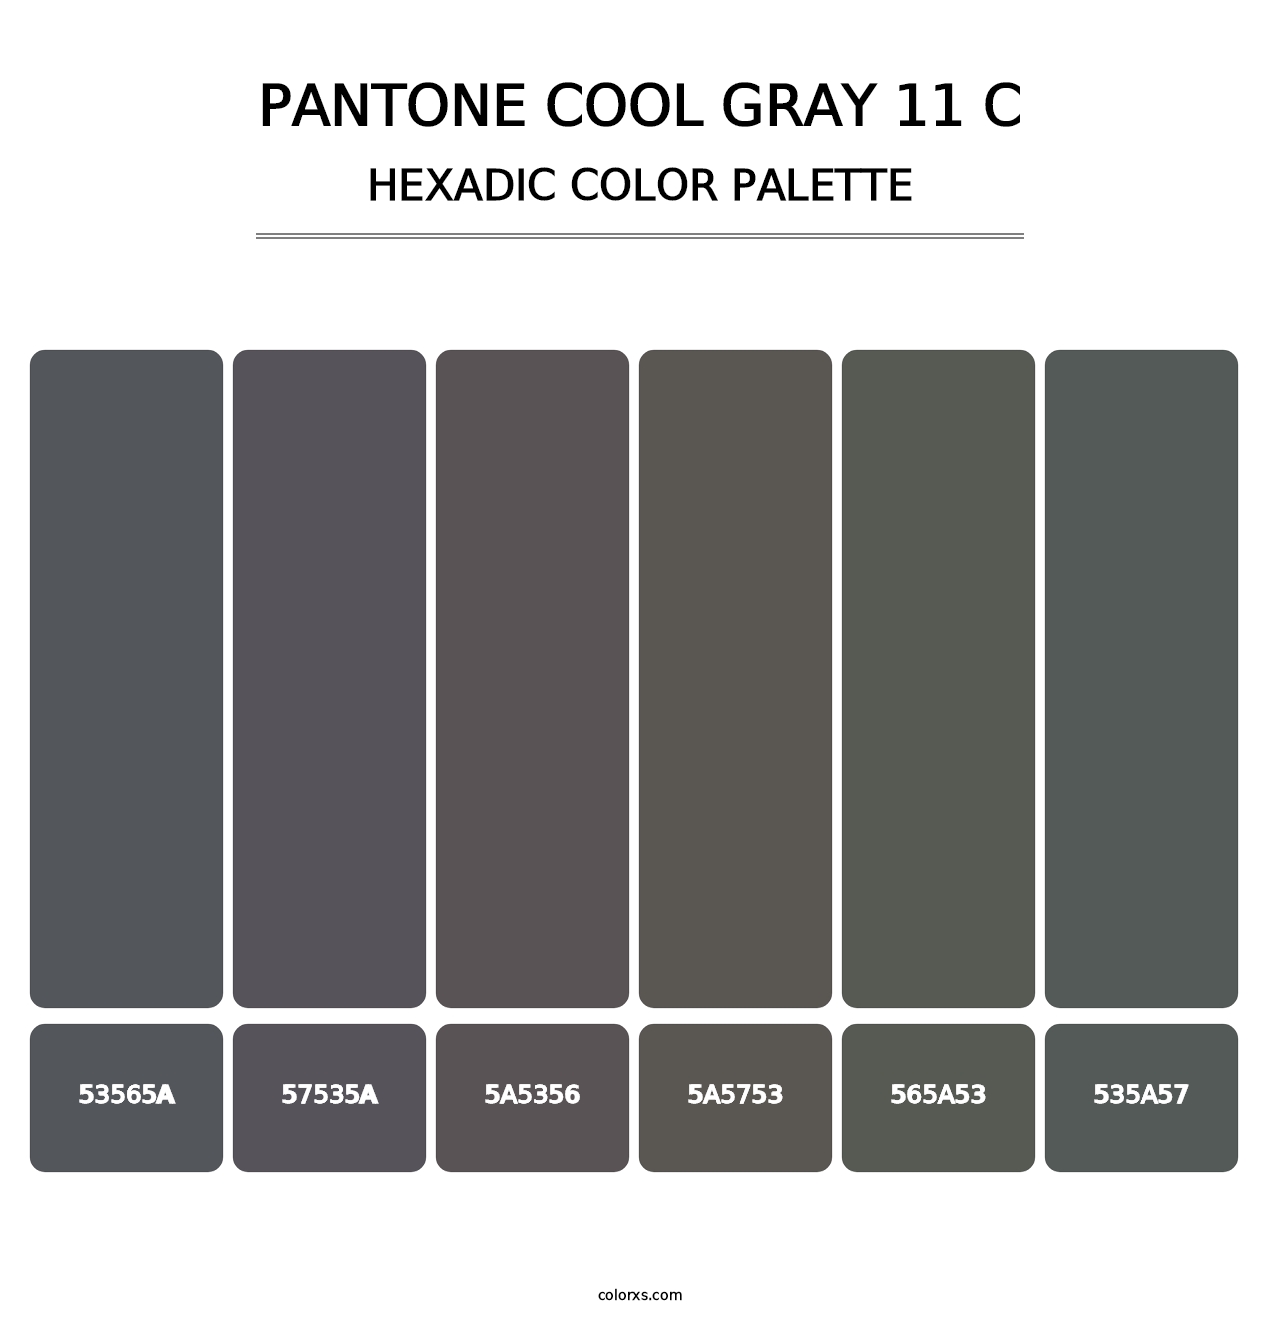 PANTONE Cool Gray 11 C - Hexadic Color Palette